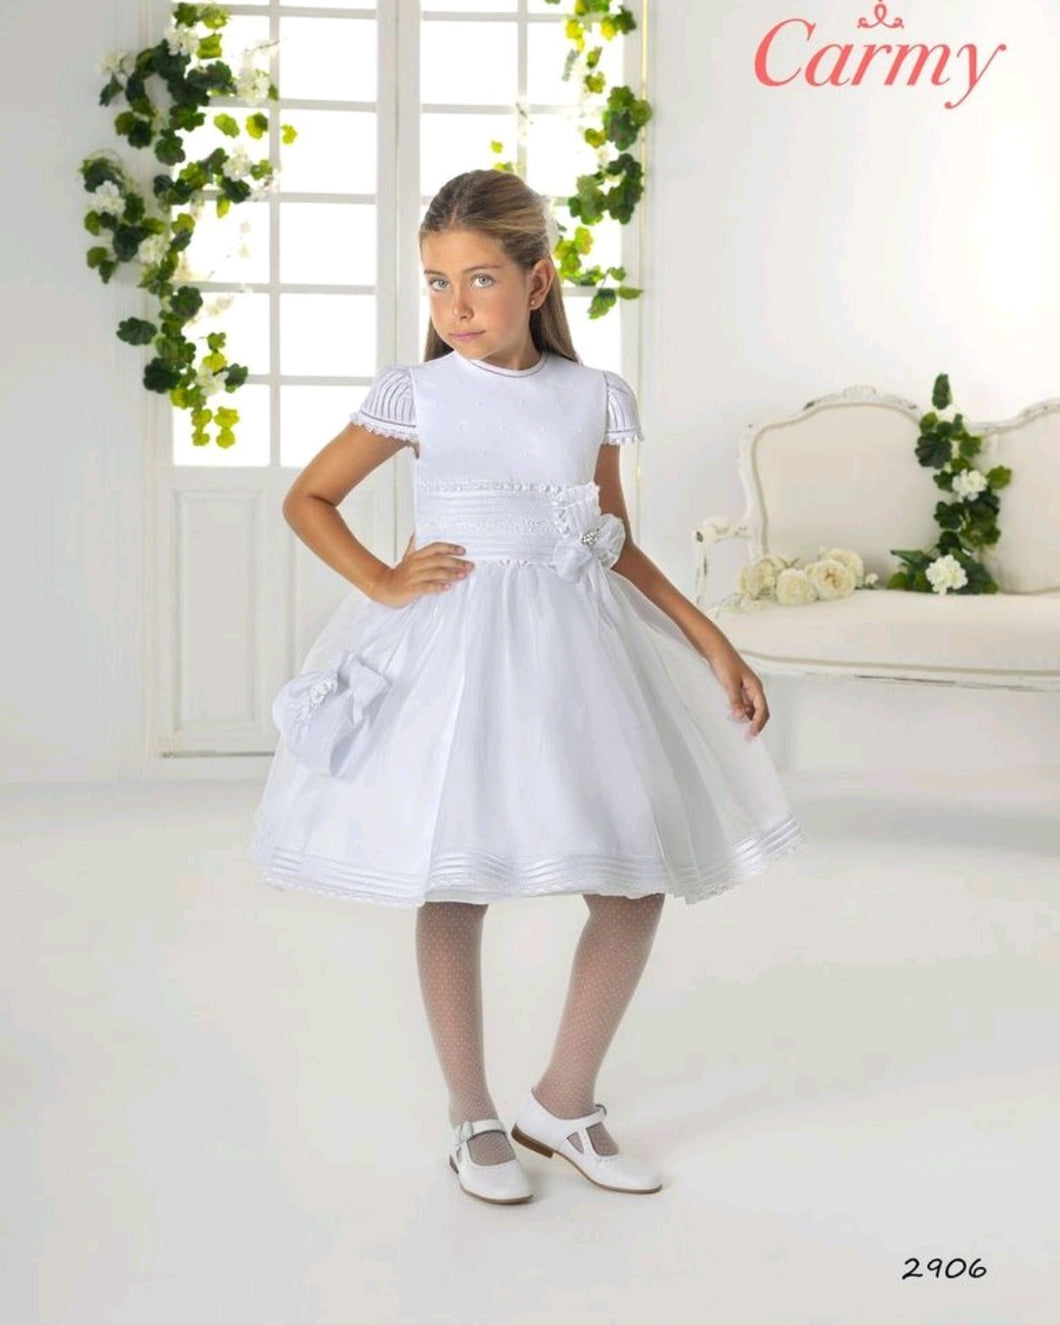 SALE Carmy Girls Communion Dress:- 2906 AGE 6